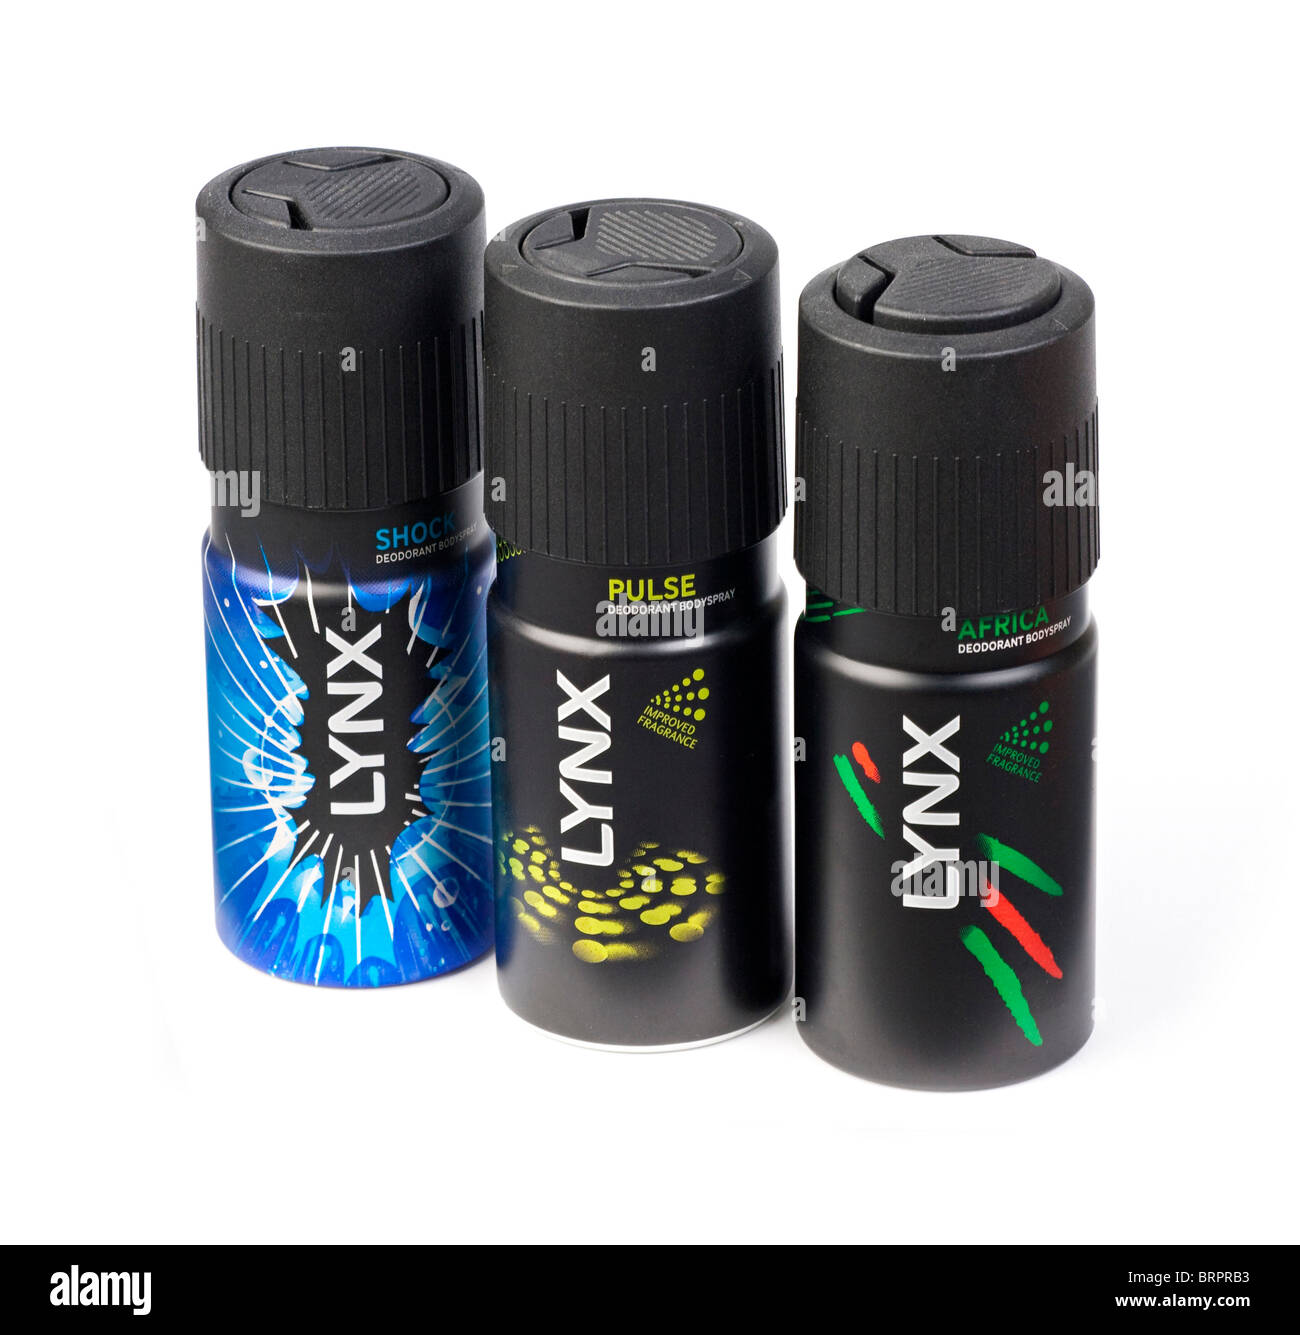 Lynx deodorant aerosol cans Stock Photo